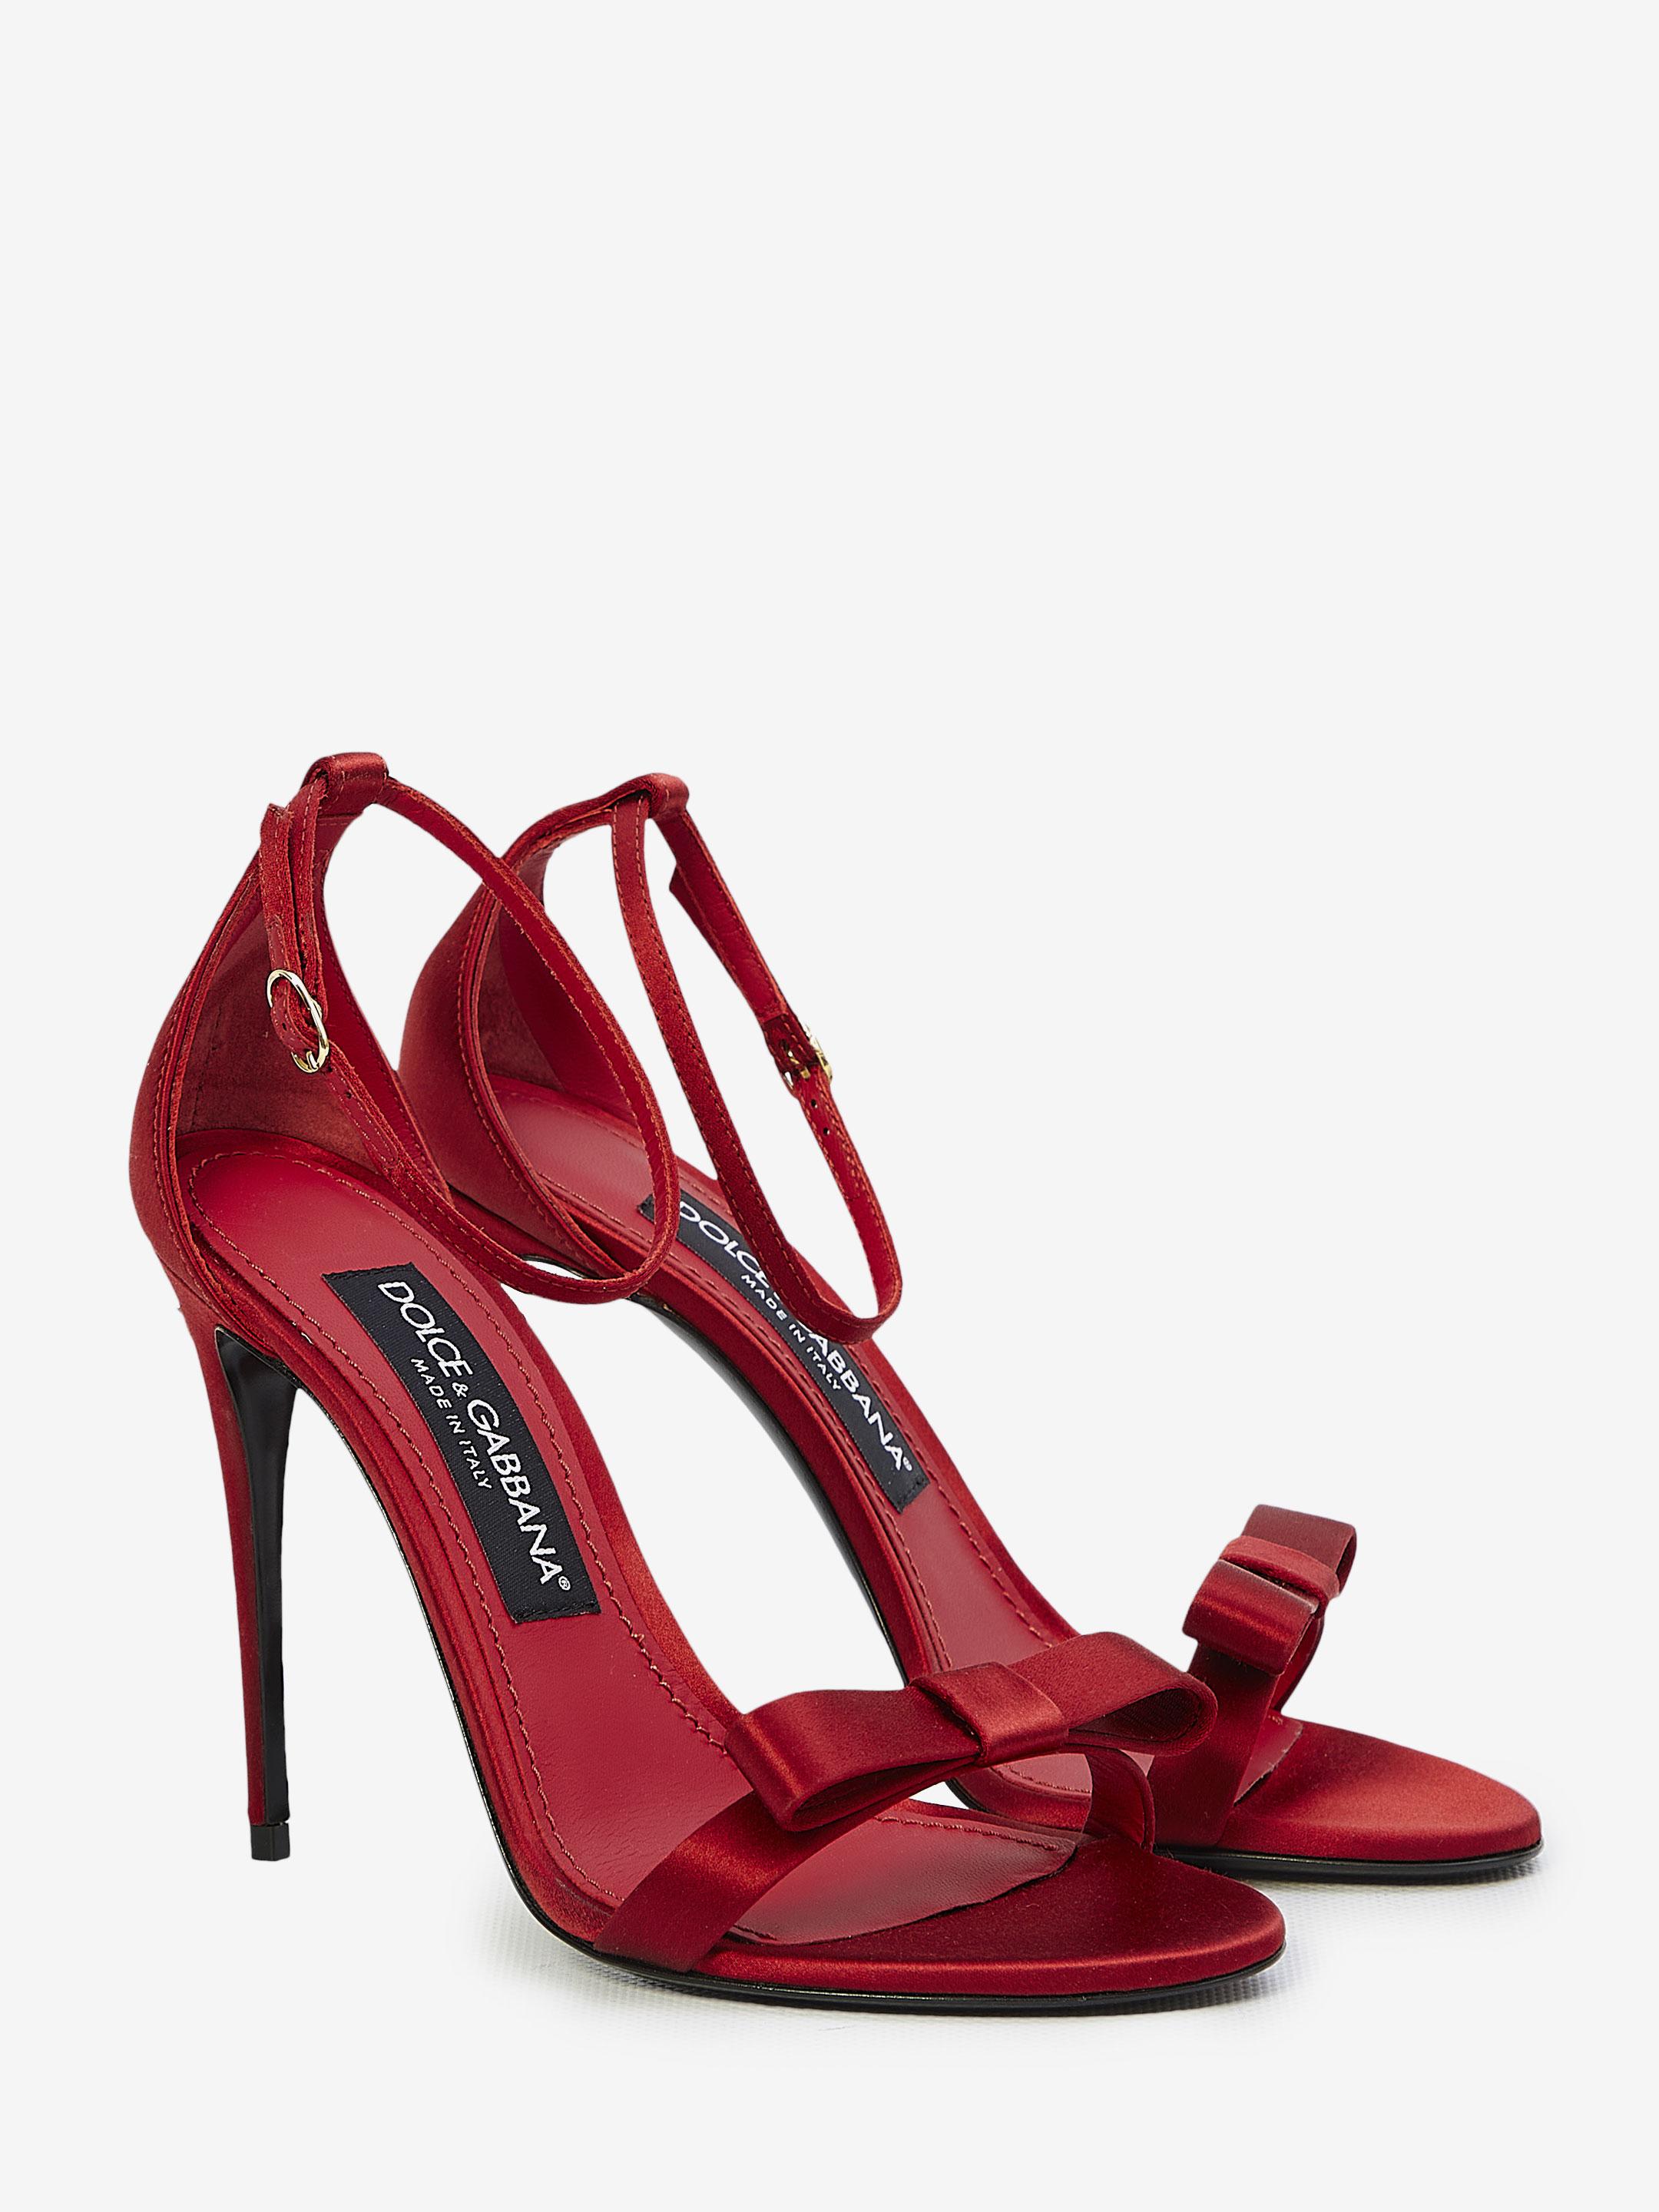 Dolce & Gabbana Keira Sandals In Satin in Red | Lyst